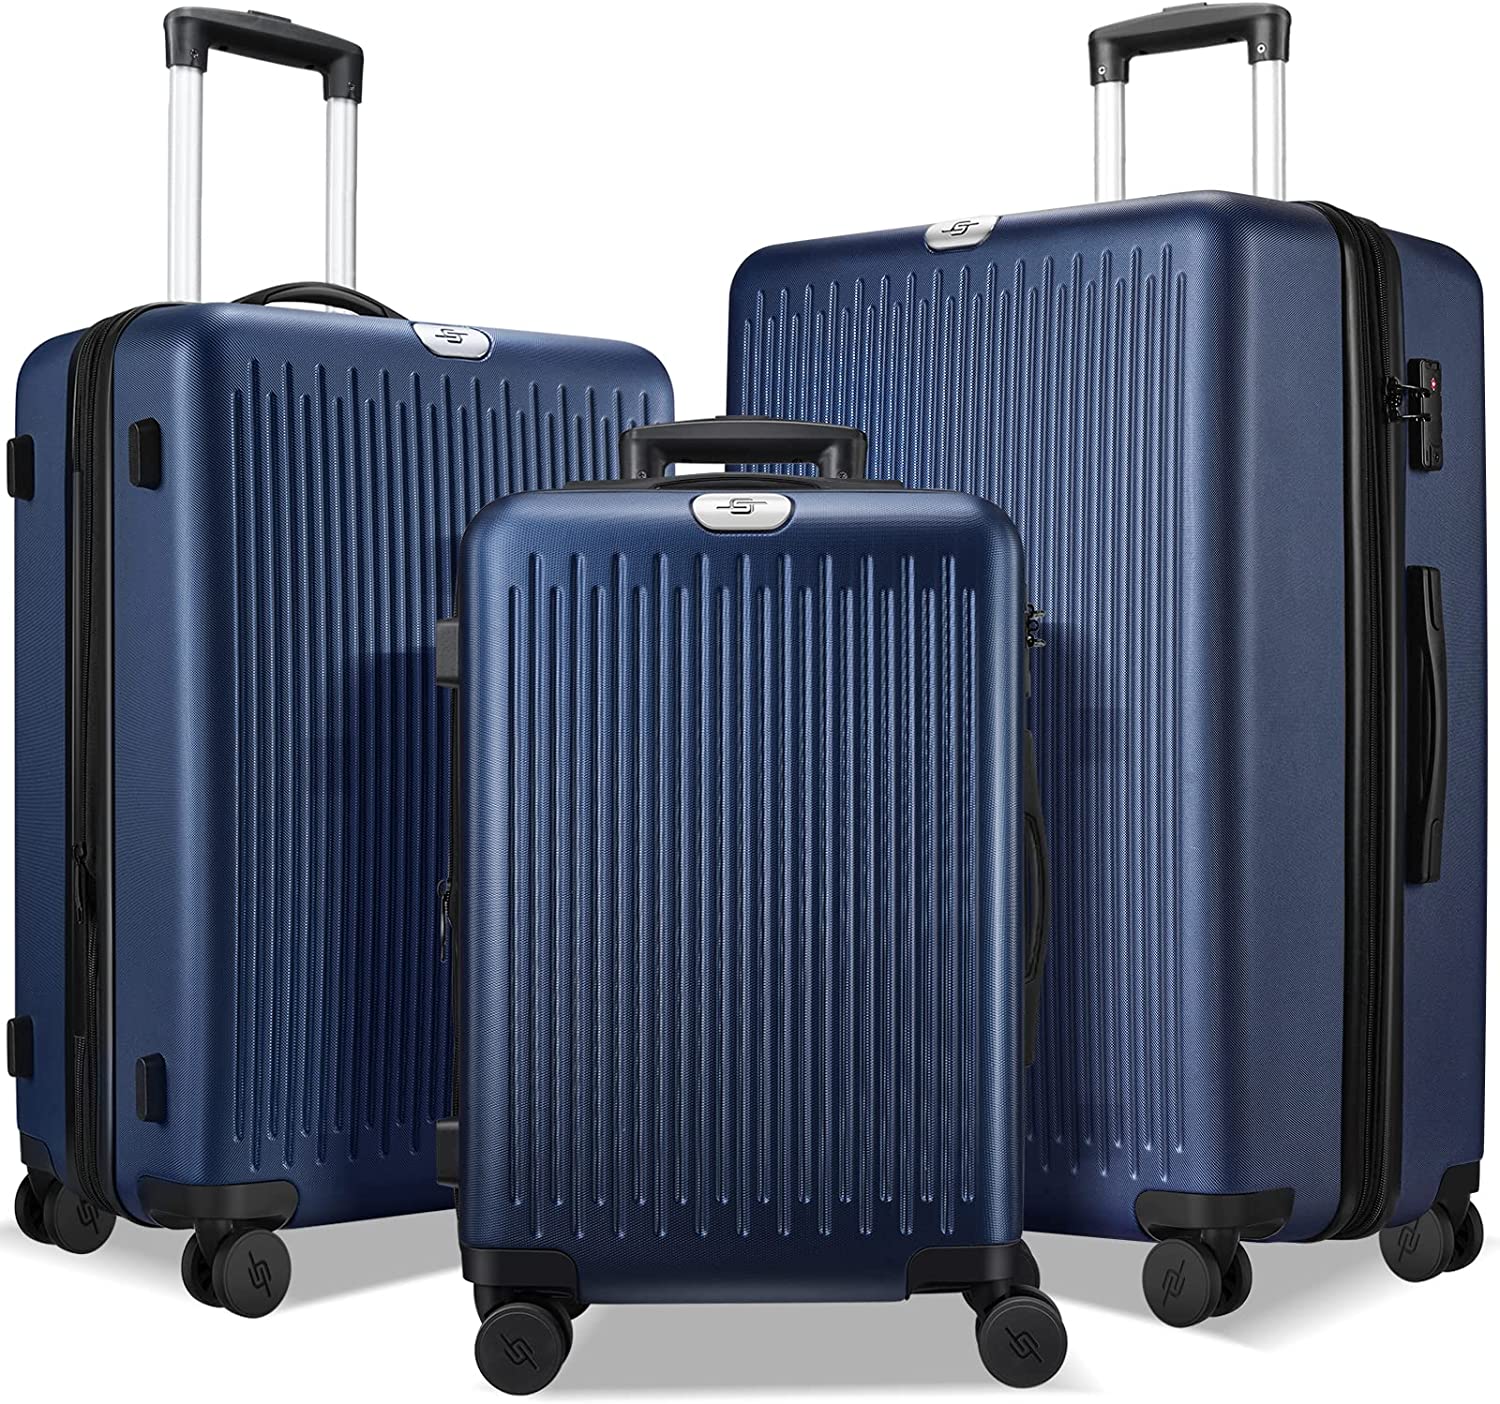 SKONYON Luggage Set 3 Piece Hardside with Spinner Wheels and TSA Lock 20 24 28 inch Suitcase